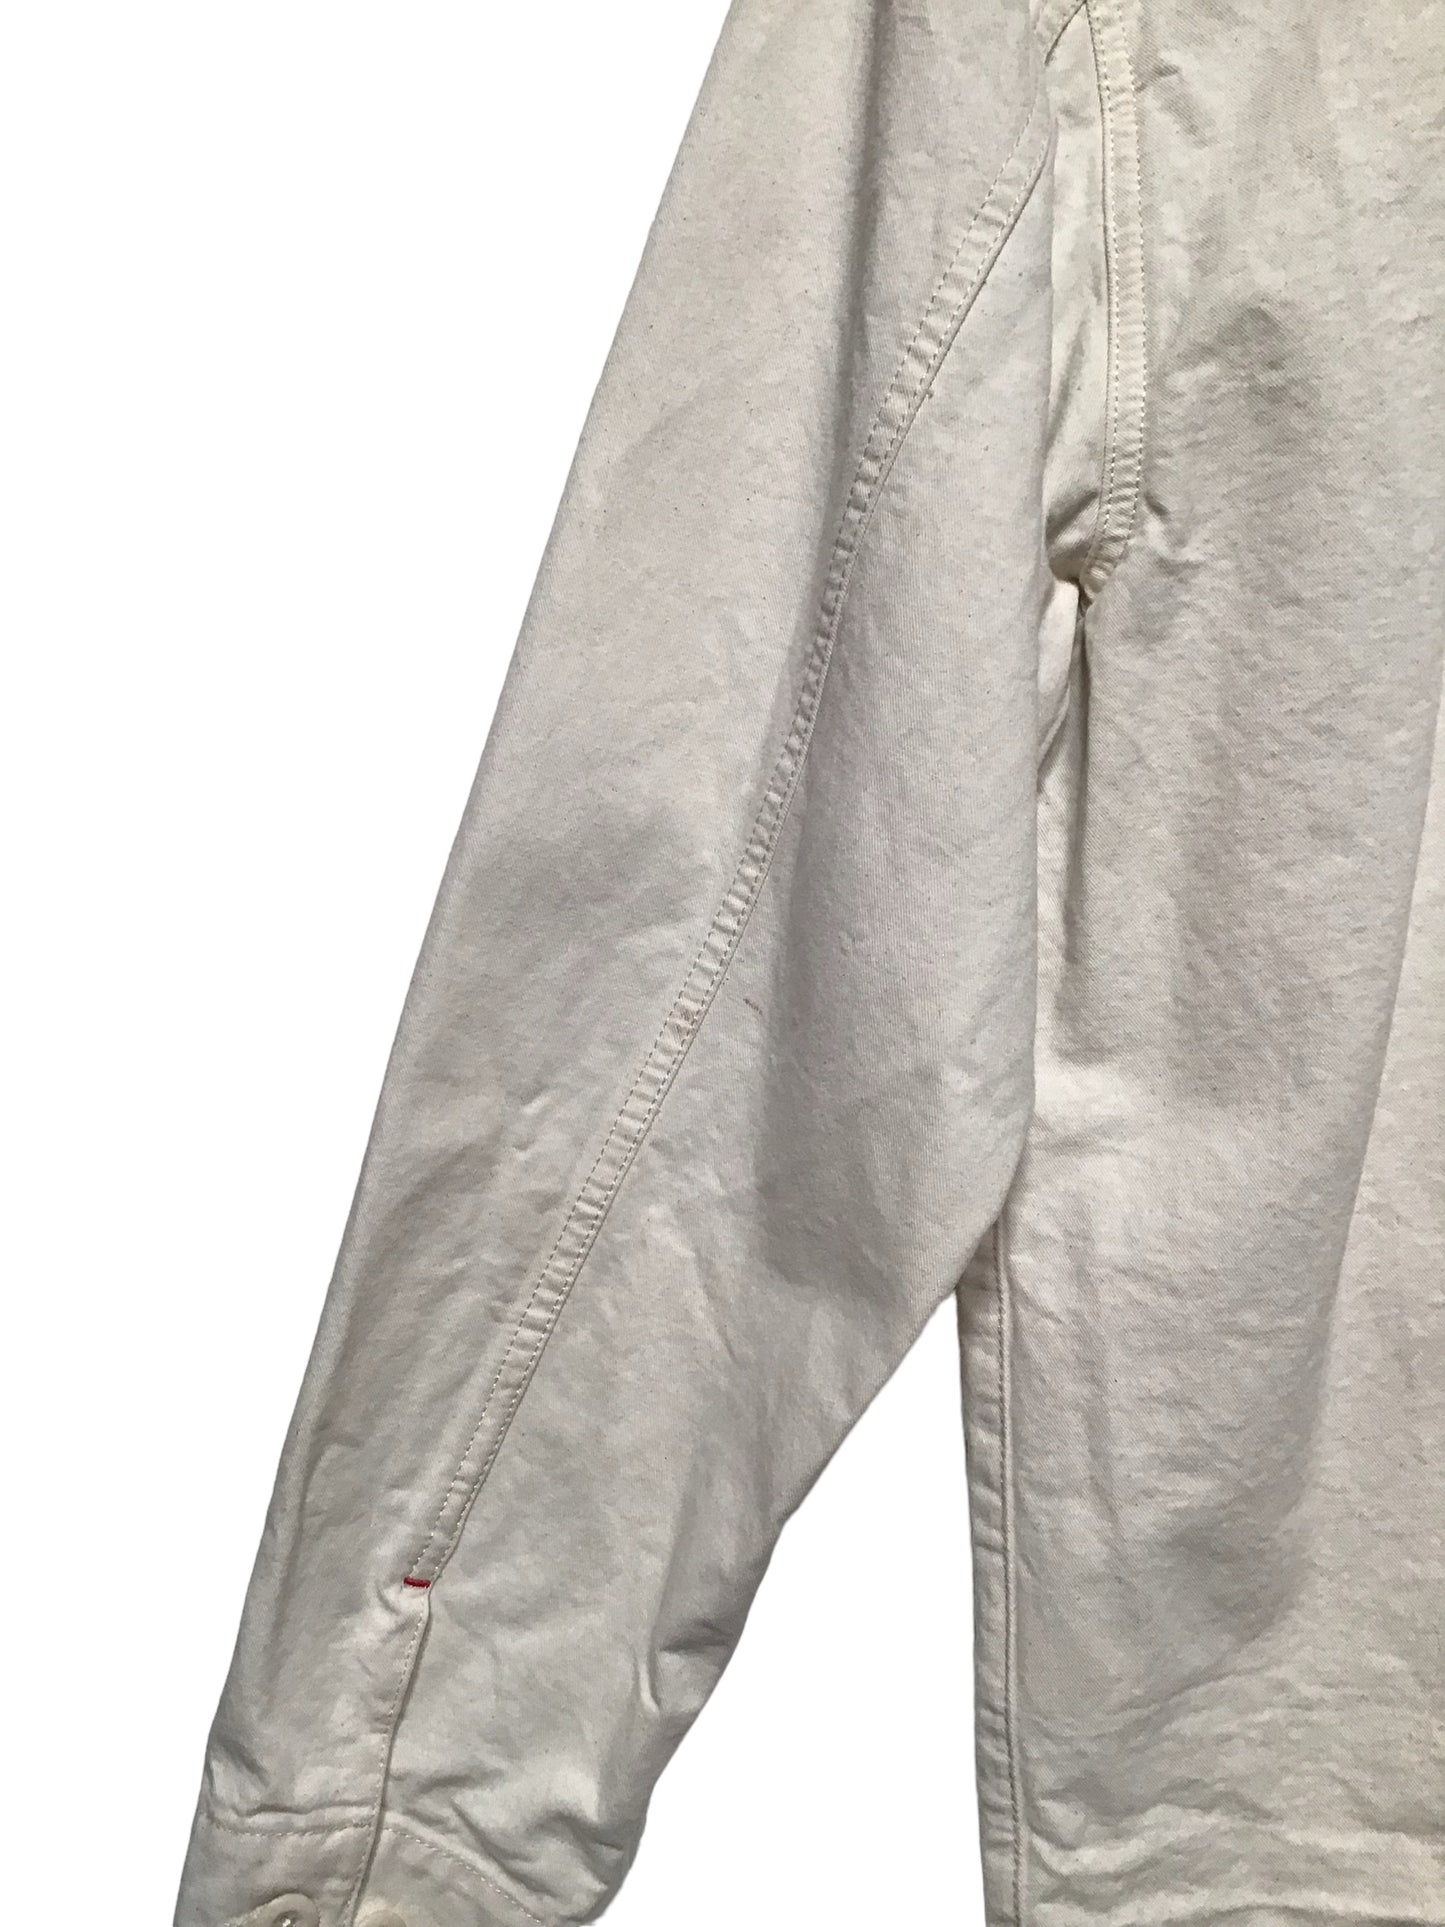 Carhartt Off White Cotton Jacket (Size M)